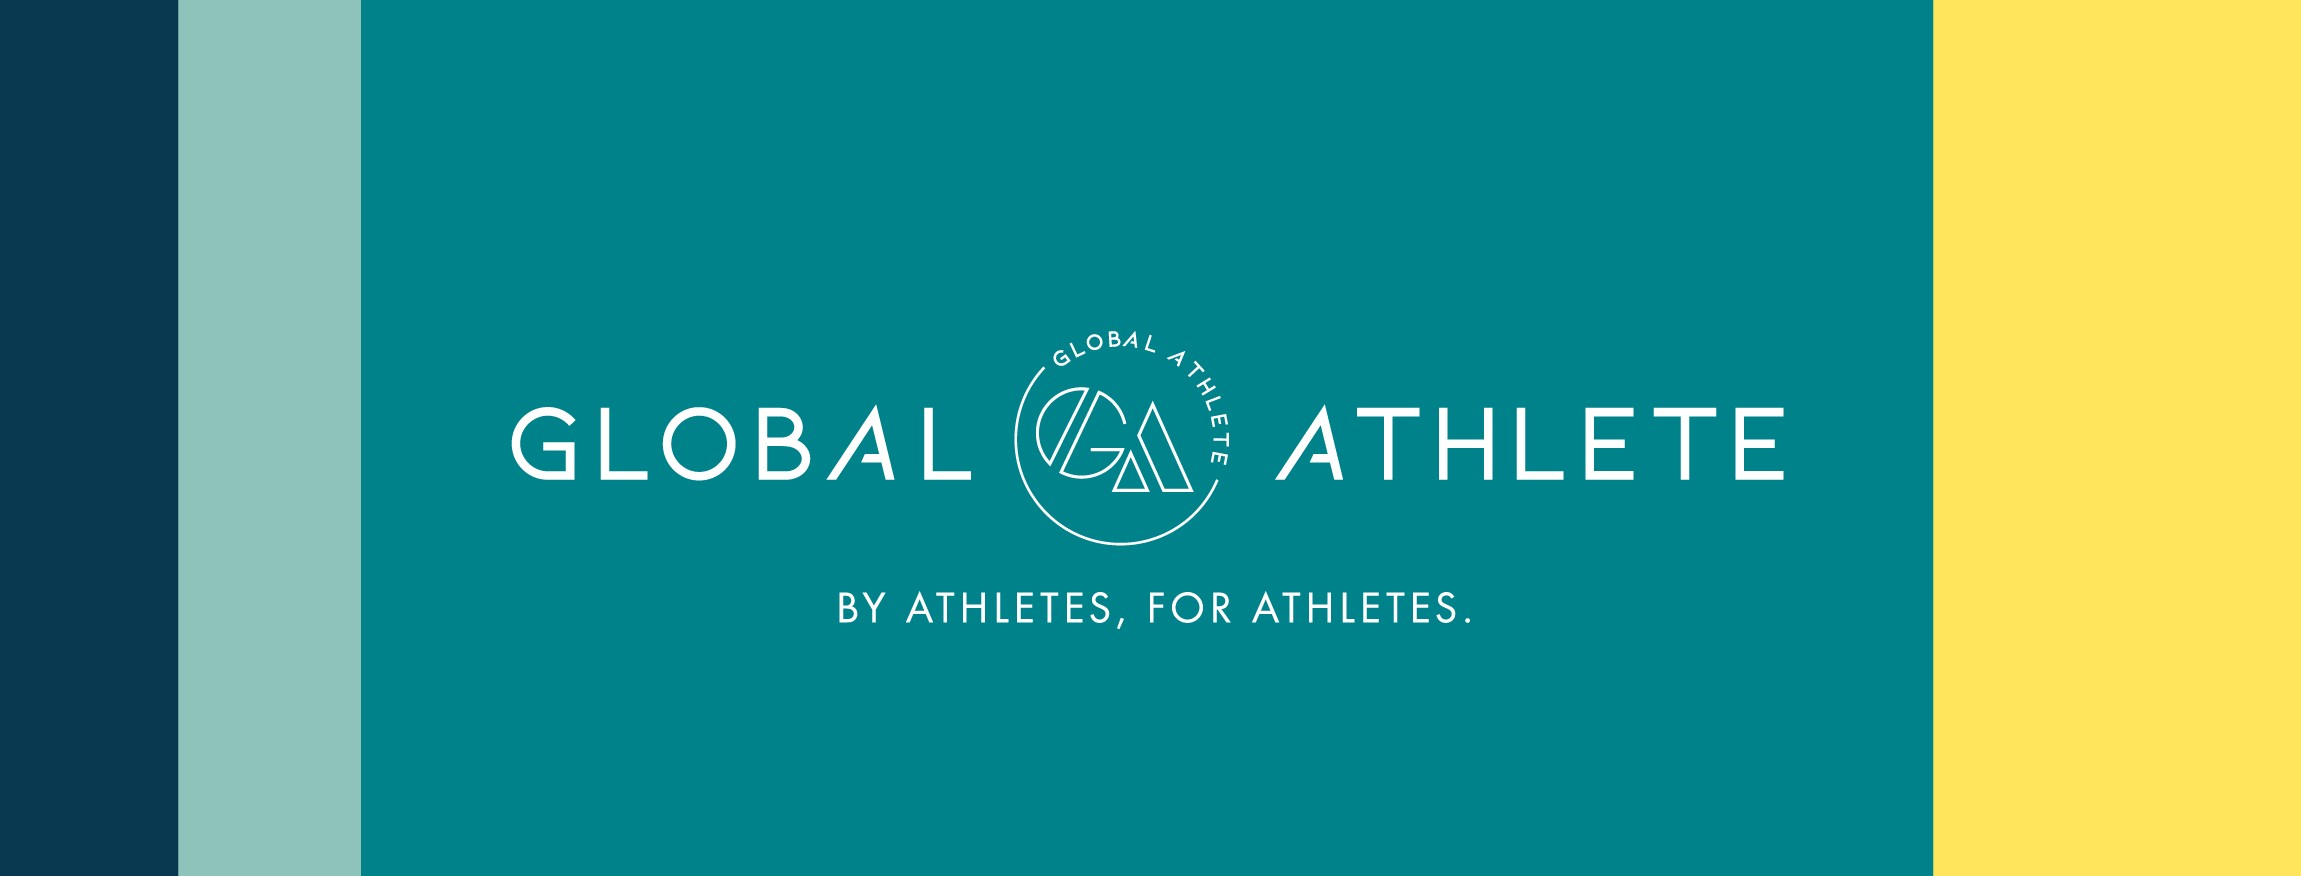 Global athlete iwata kiwami 4